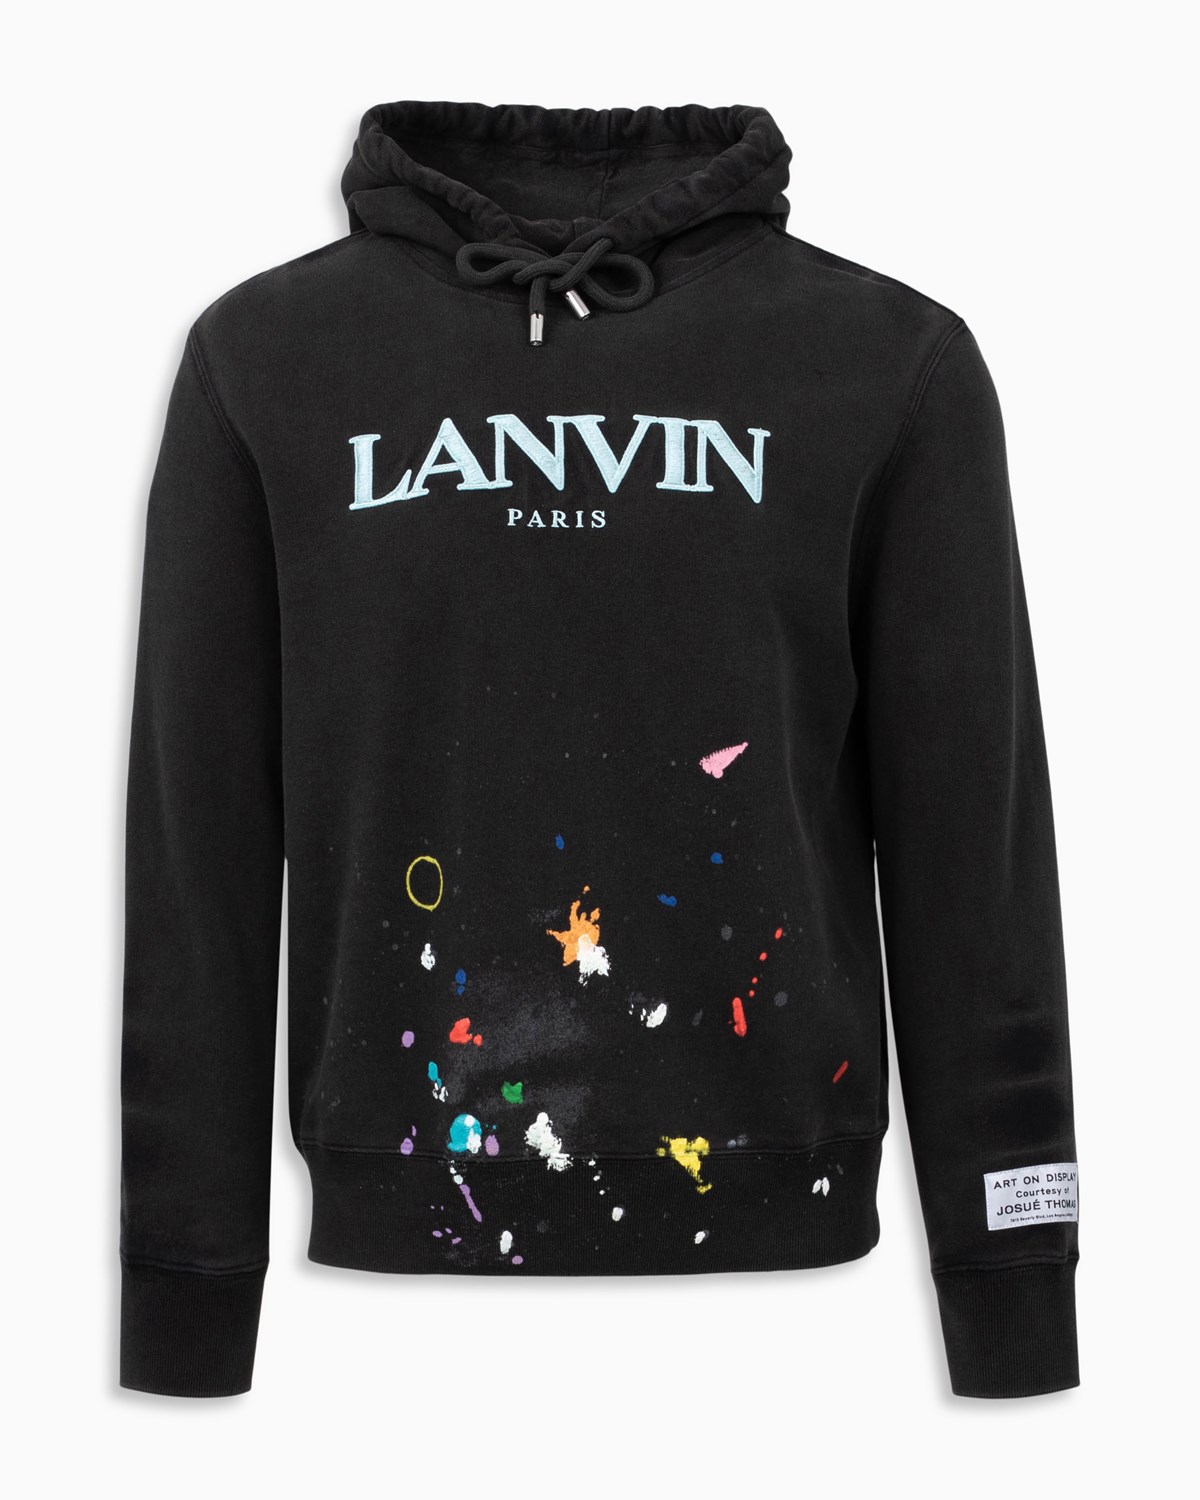 Lanvin Paris Embroidered Hoodie Lanvin Tops Sweats & Hoodies Black